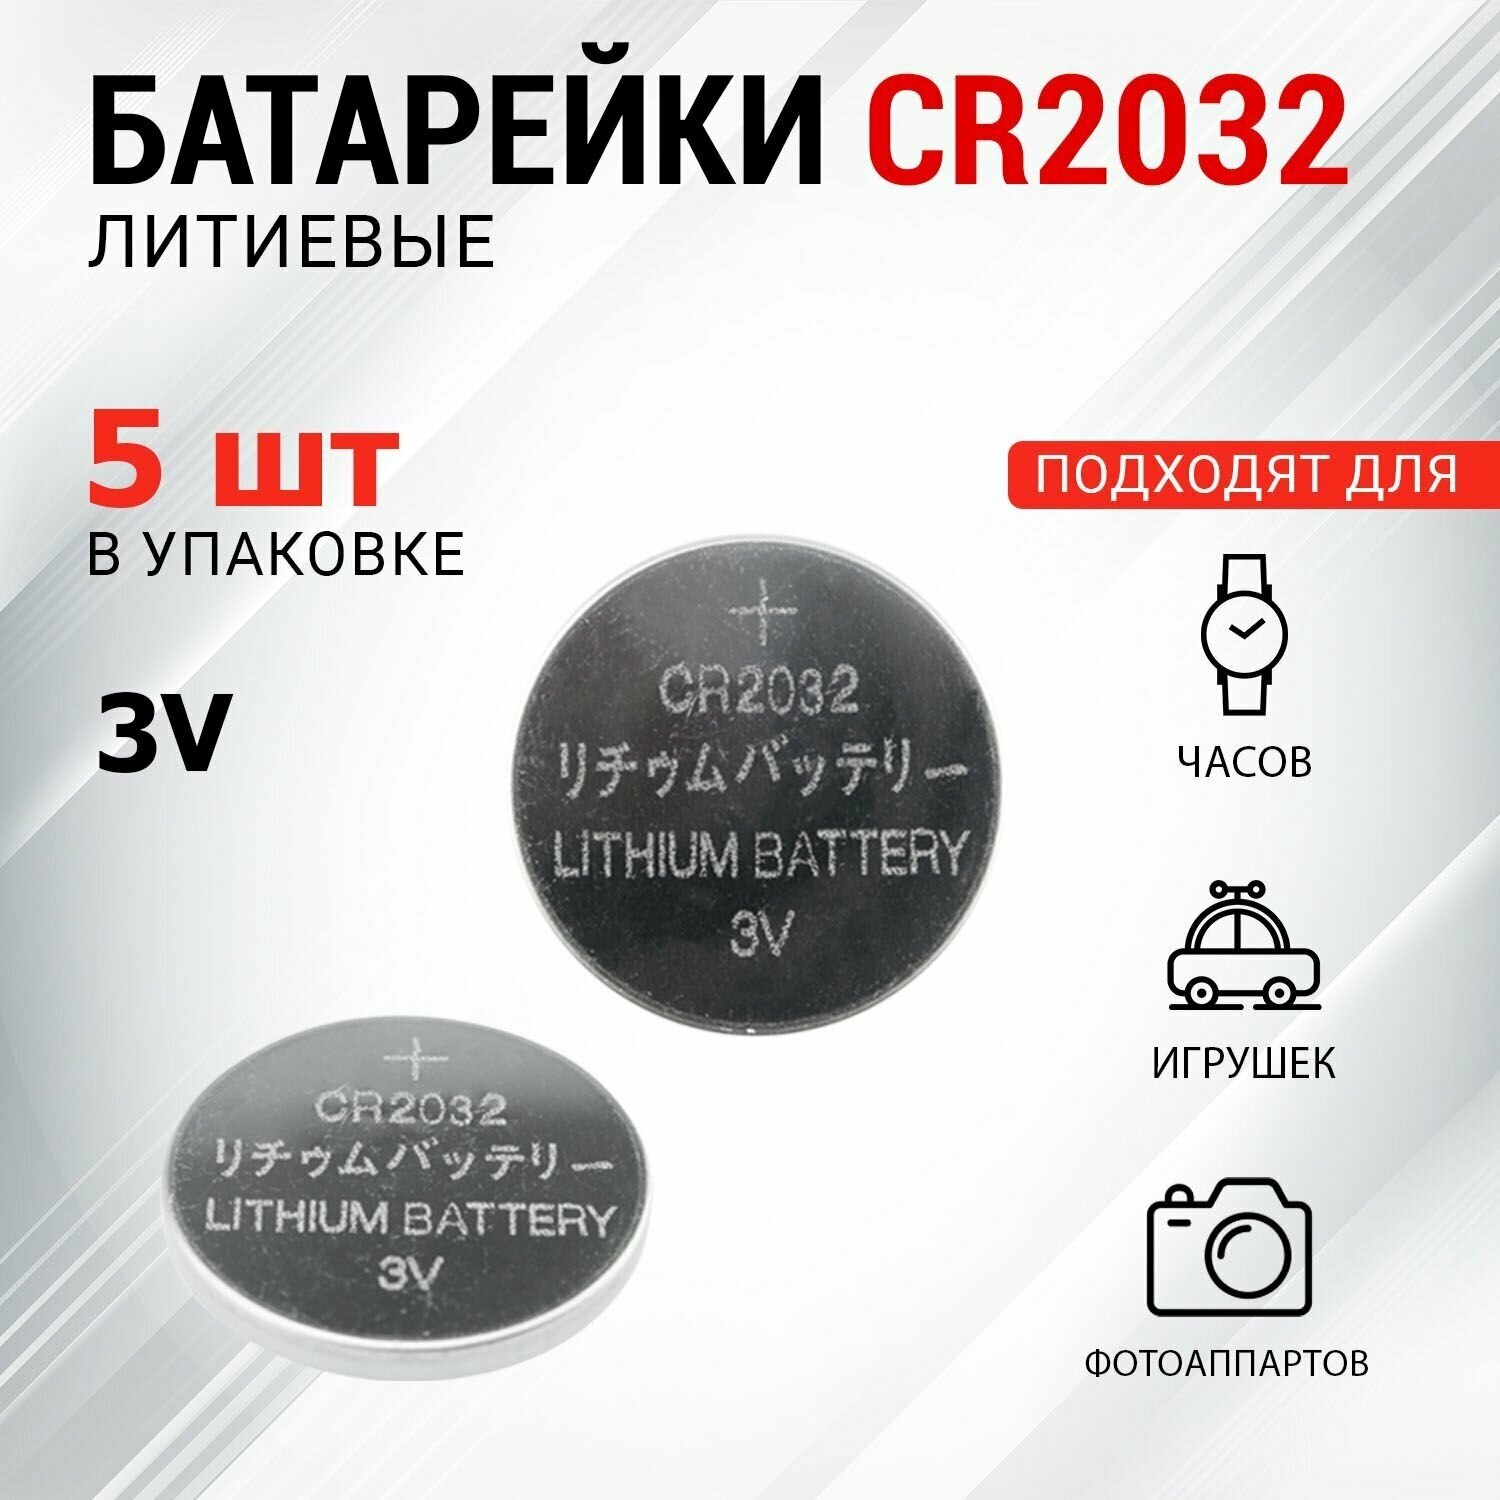 Батарейка литиевая CR2032, 3В, 5 шт, блистер REXANT 5 шт арт. 30-1108